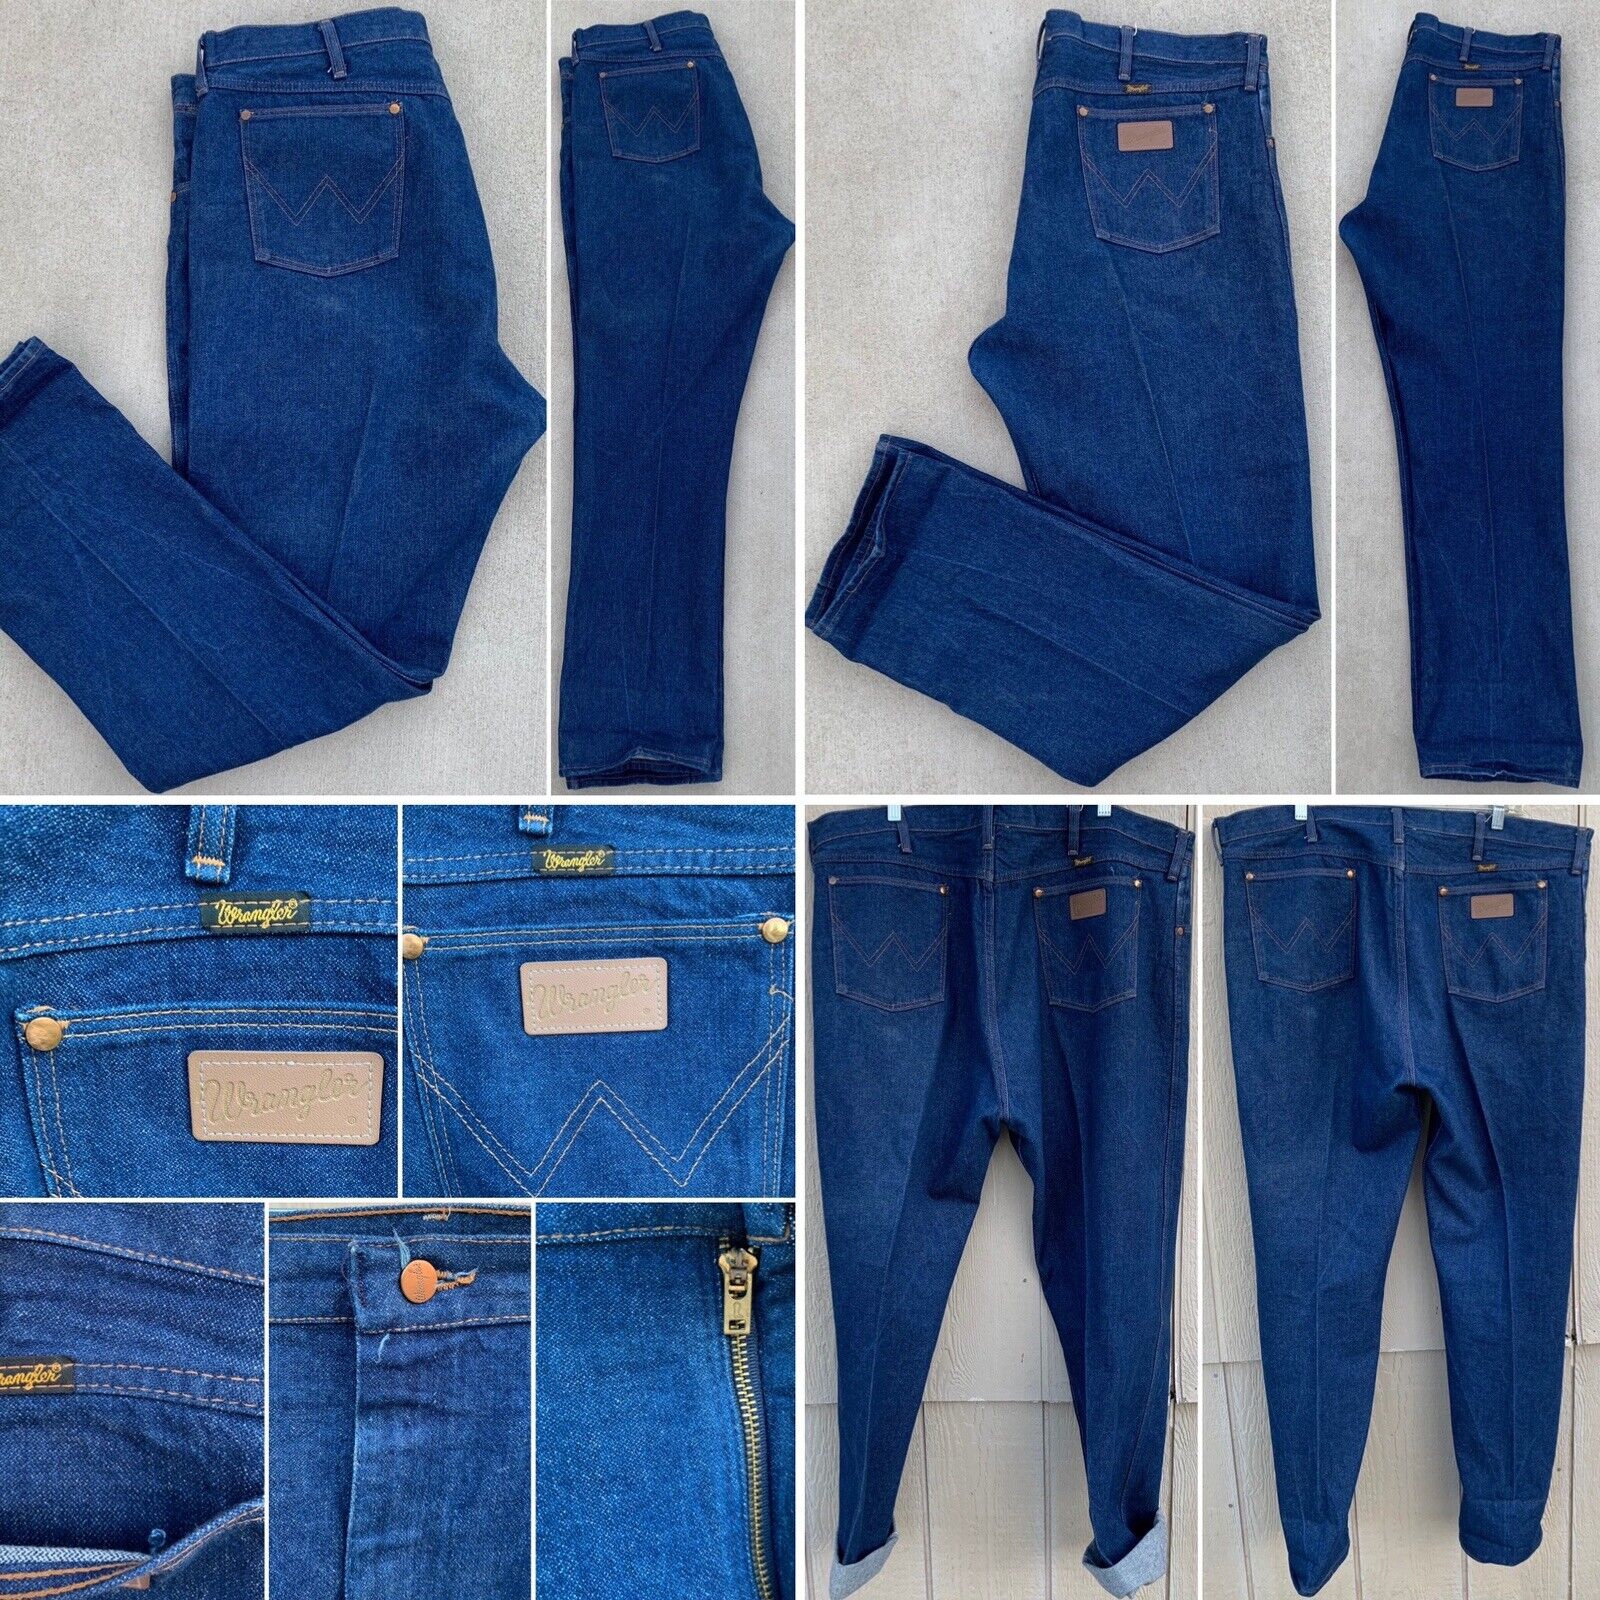 Vintage Wrangler Jeans 13MWZ made in USA Size 44 X 34. (inseam measures 34 1/4”) Tania okazja, wielka okazja